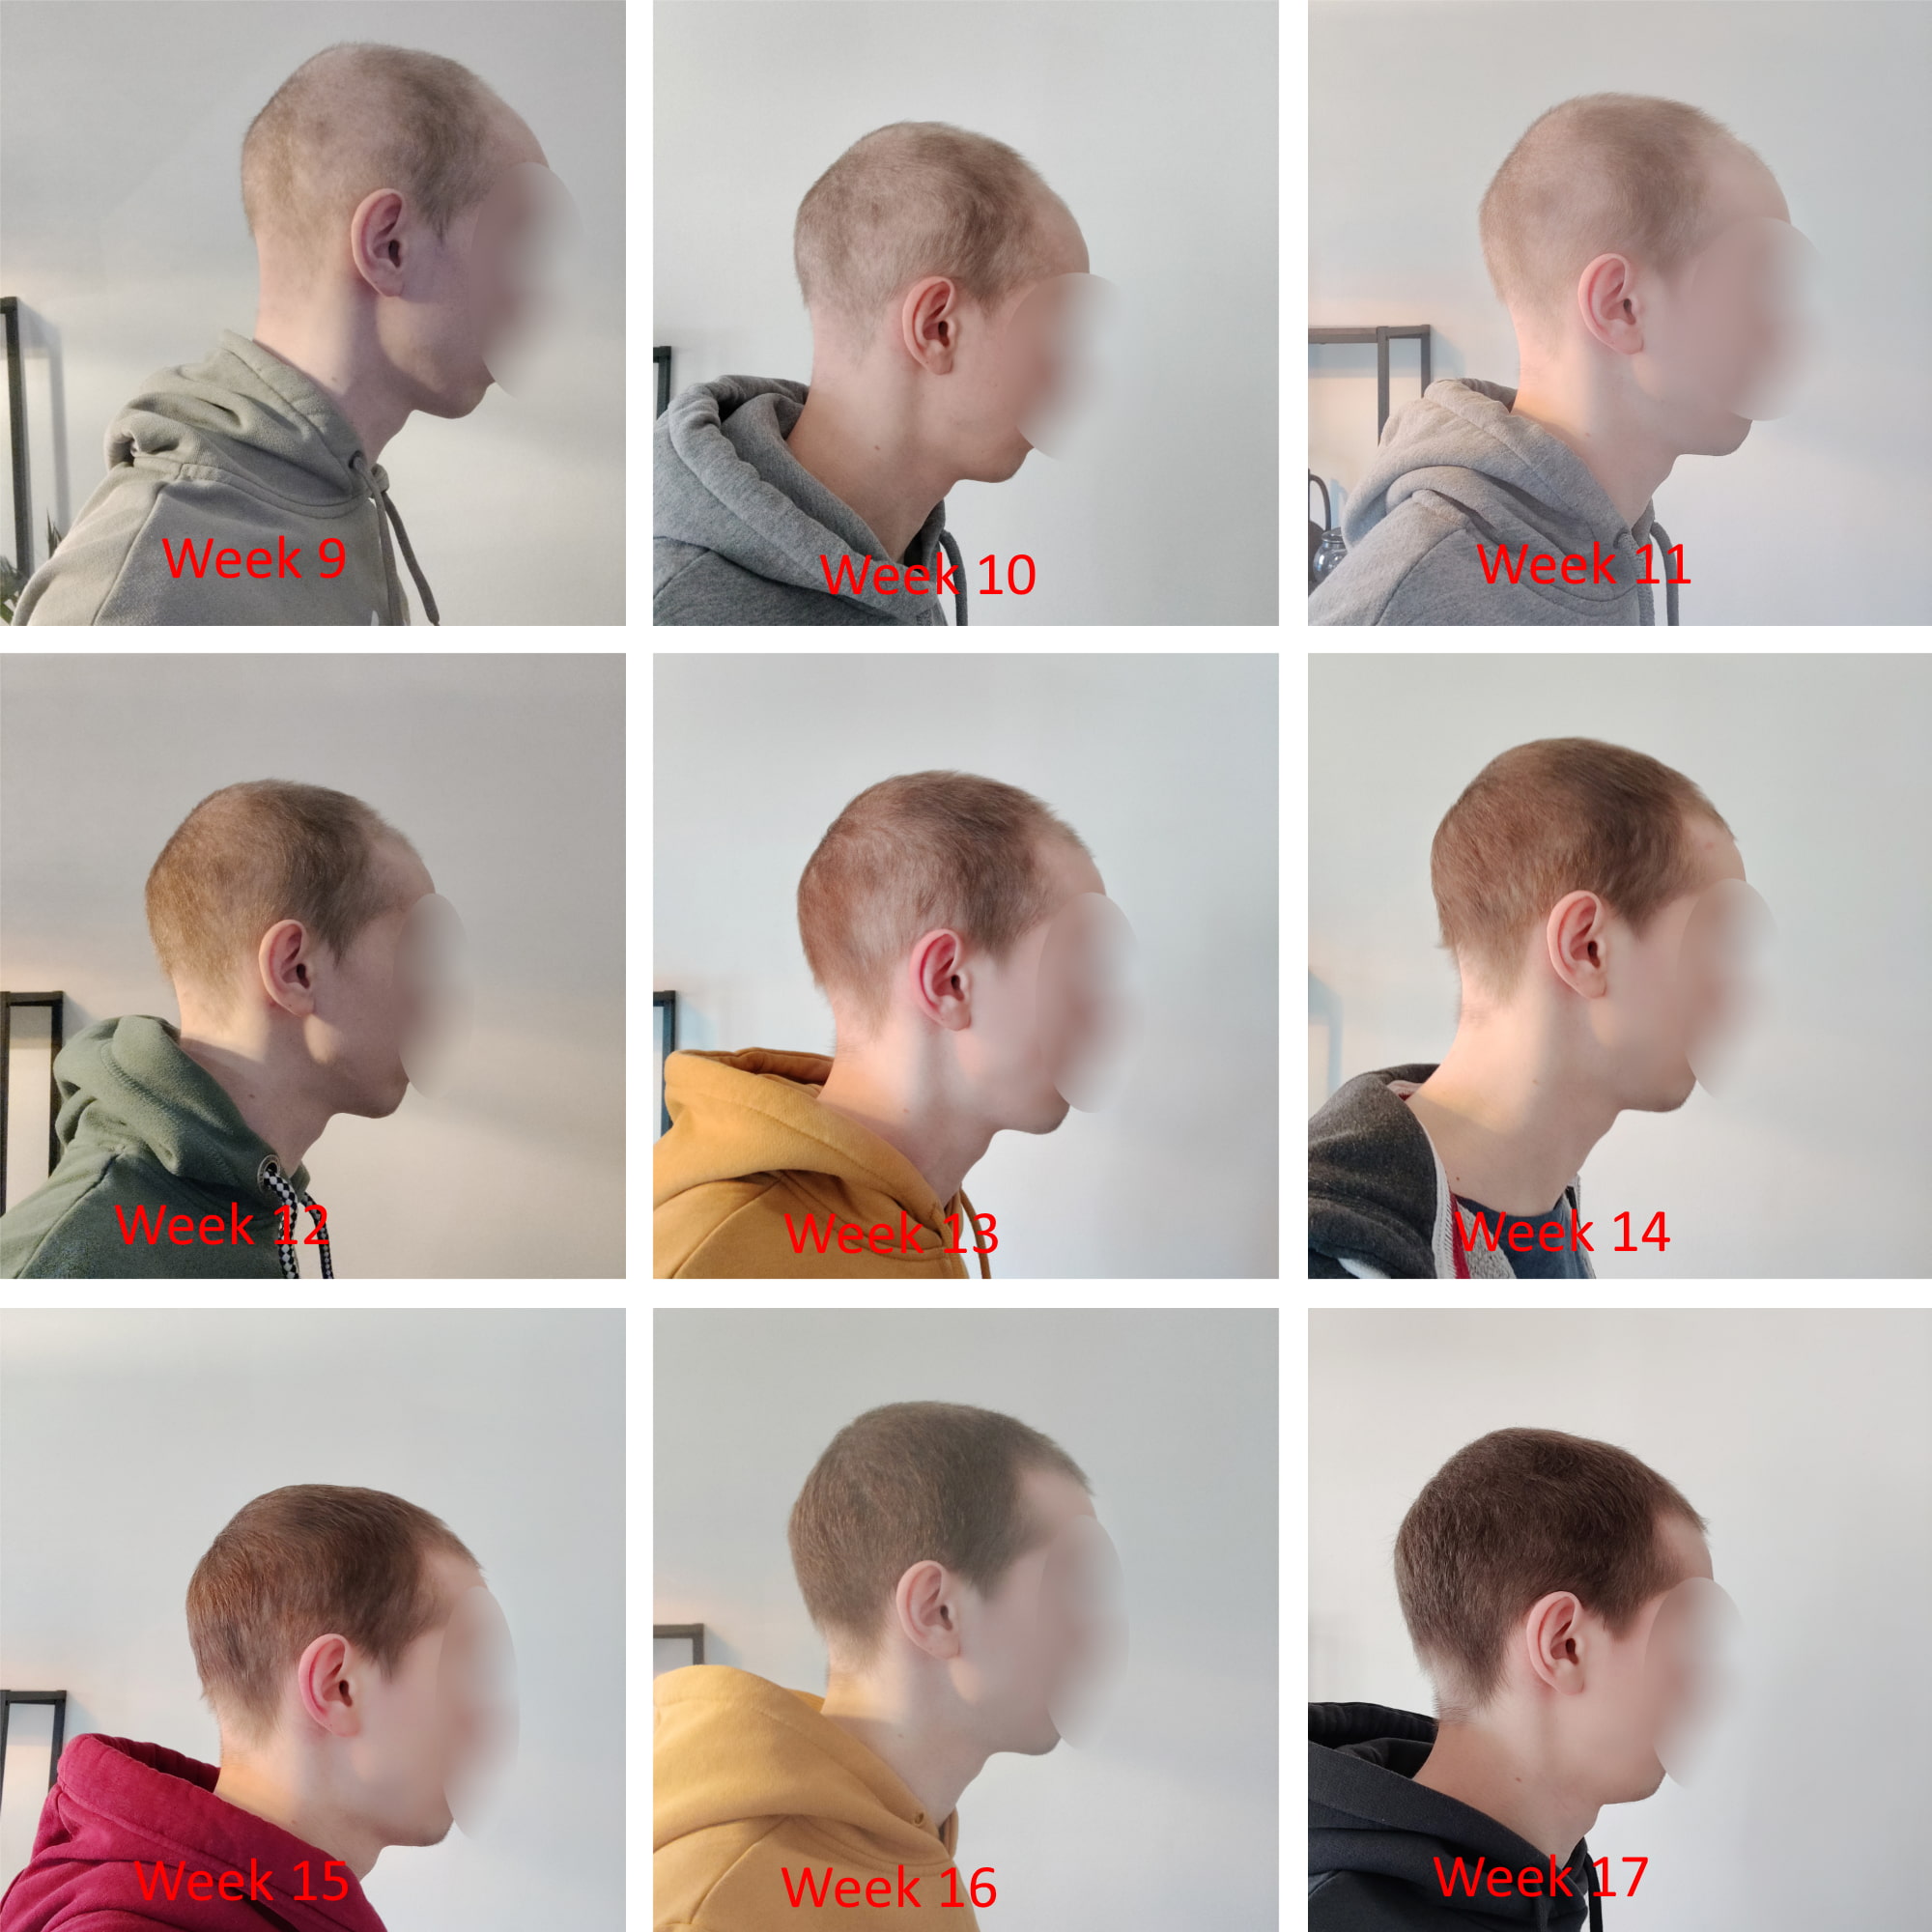 deuruxolitinib alopecia areata results 02 - Alopecia Areata Treatment: What Future Holds